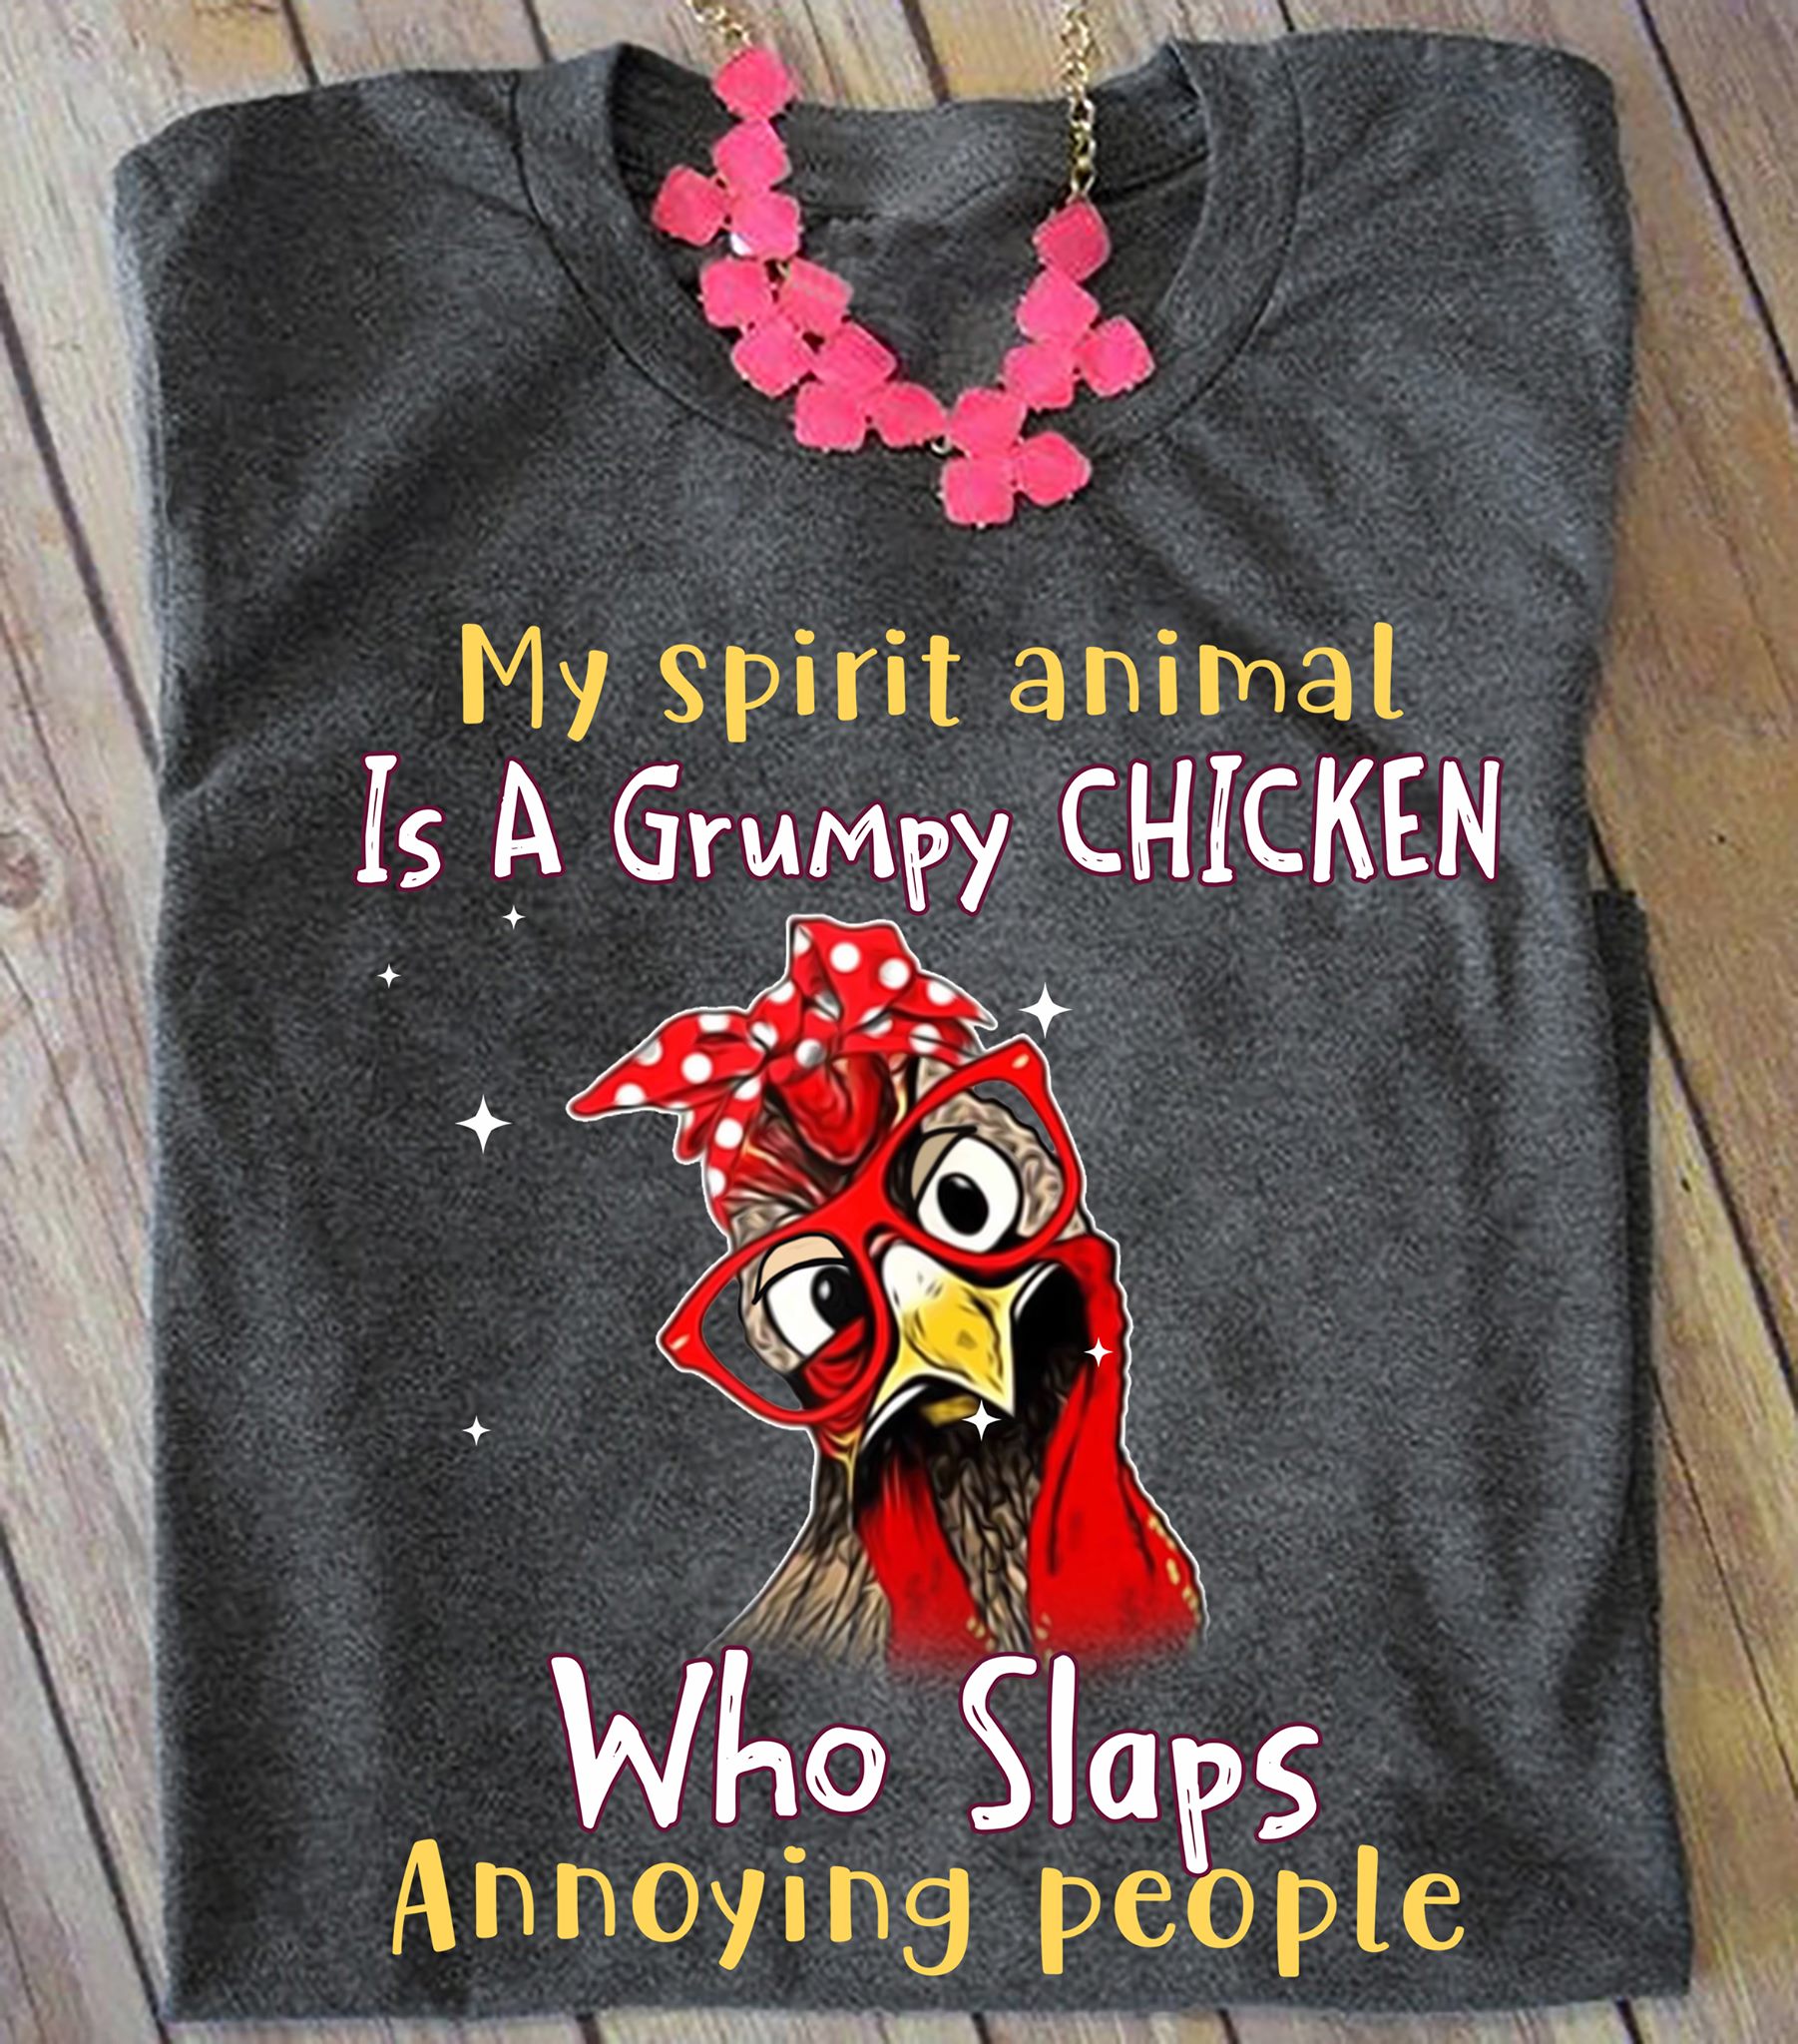 My spirit animal is a grumpy chicken who slaps annoying people